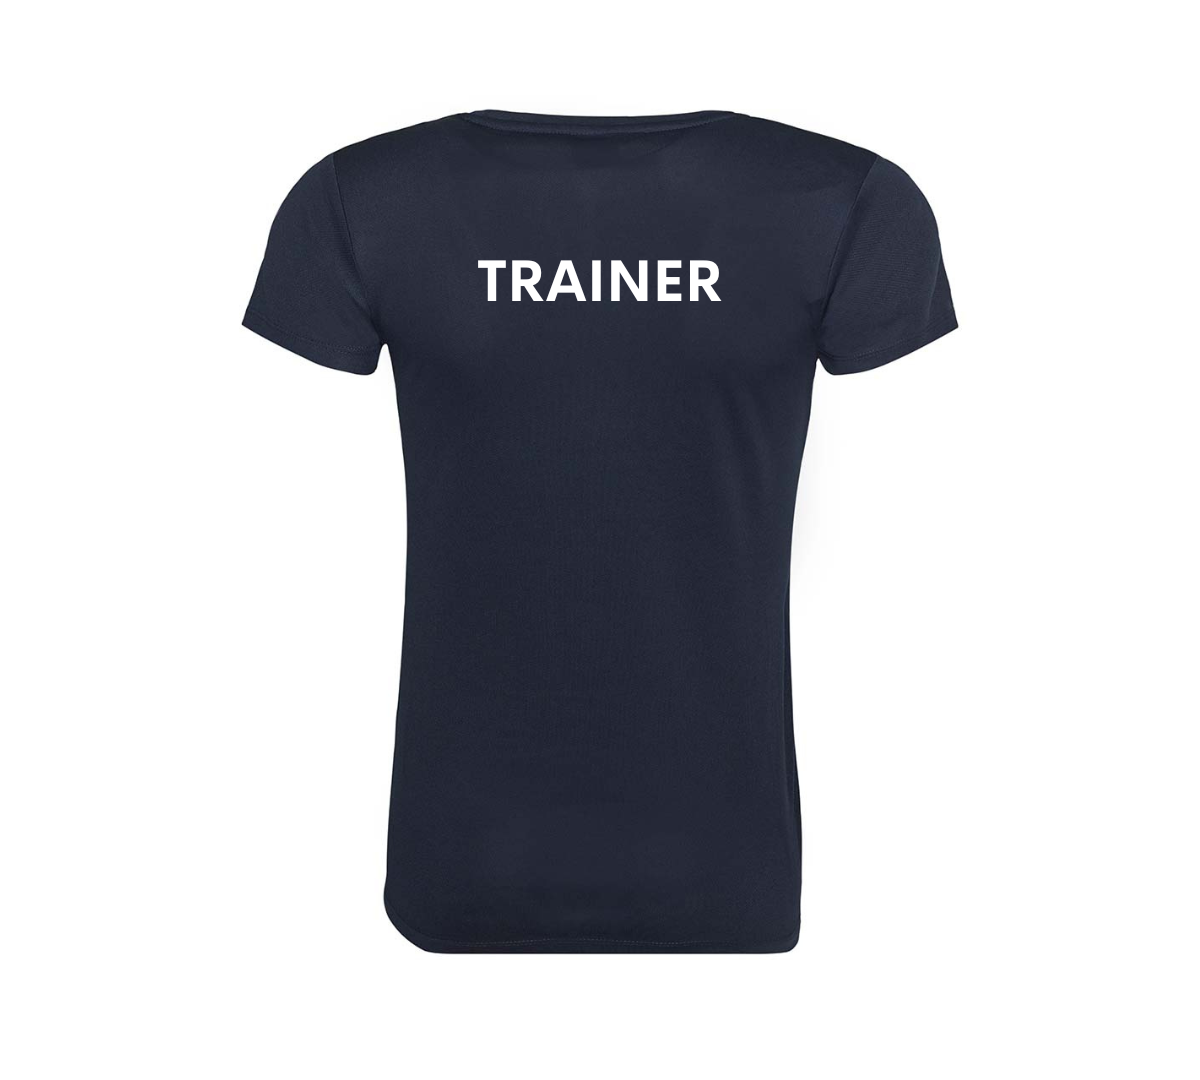 The Shredquarters 'Trainer' Ladies Training T-Shirts